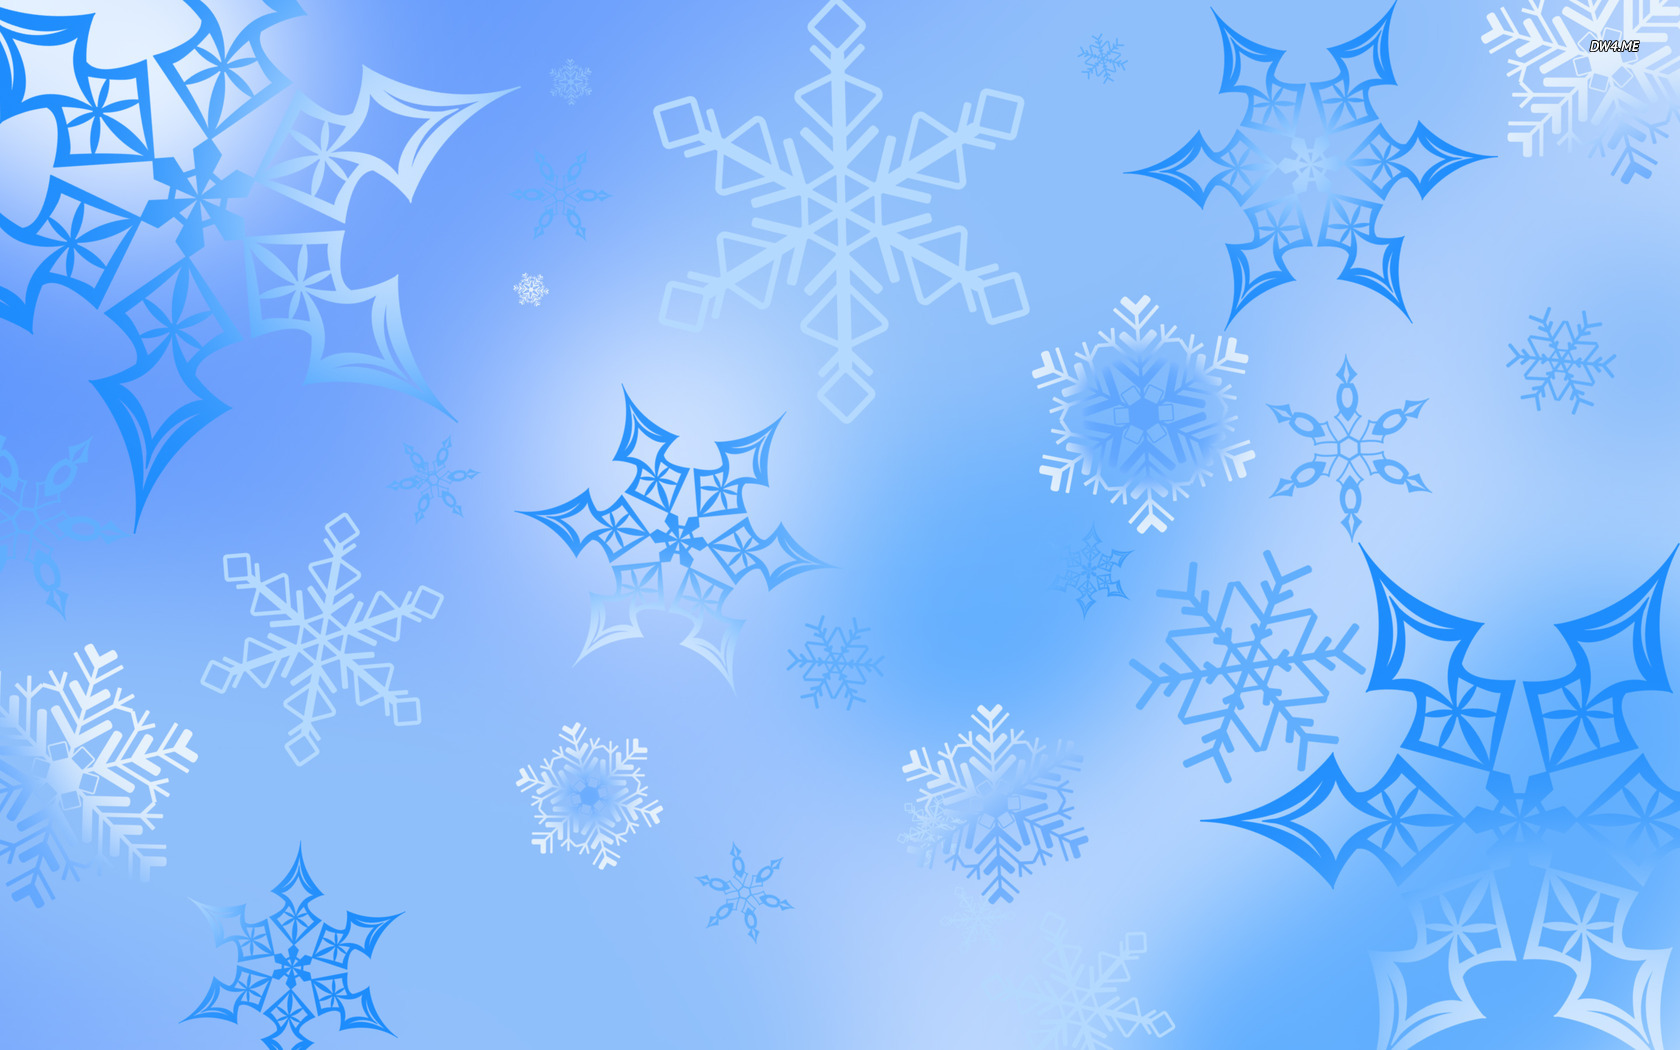 Falling Snow Wallpaper Snowflakes wallpaper